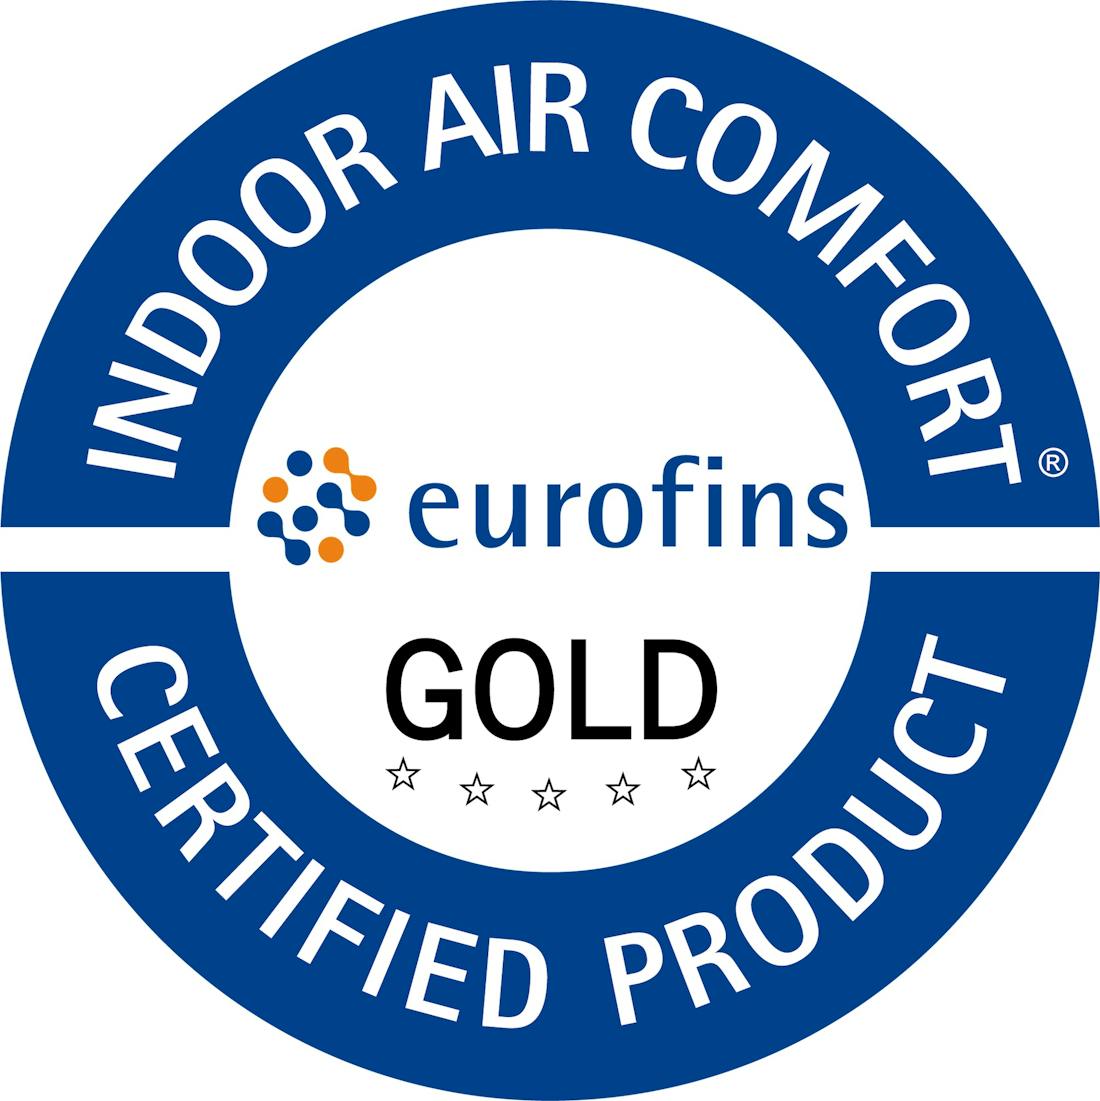 Dekton® achieves Eurofins IAC Gold certification